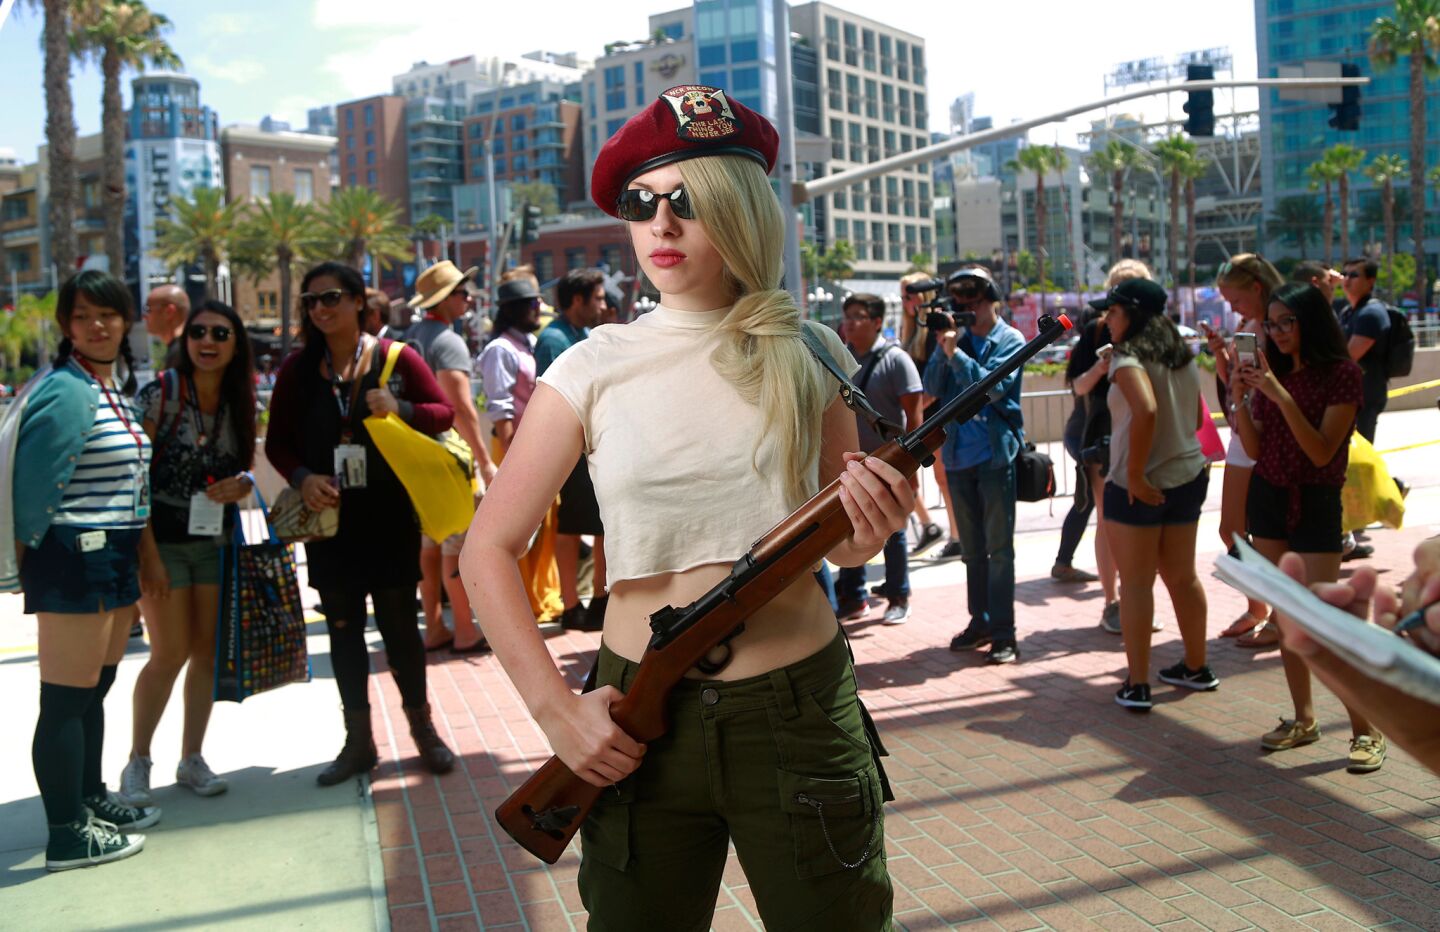 Sam Demangate of Santa Barbara dressed as Genderbent Boone at Comic-Con in San Diego on July 20.